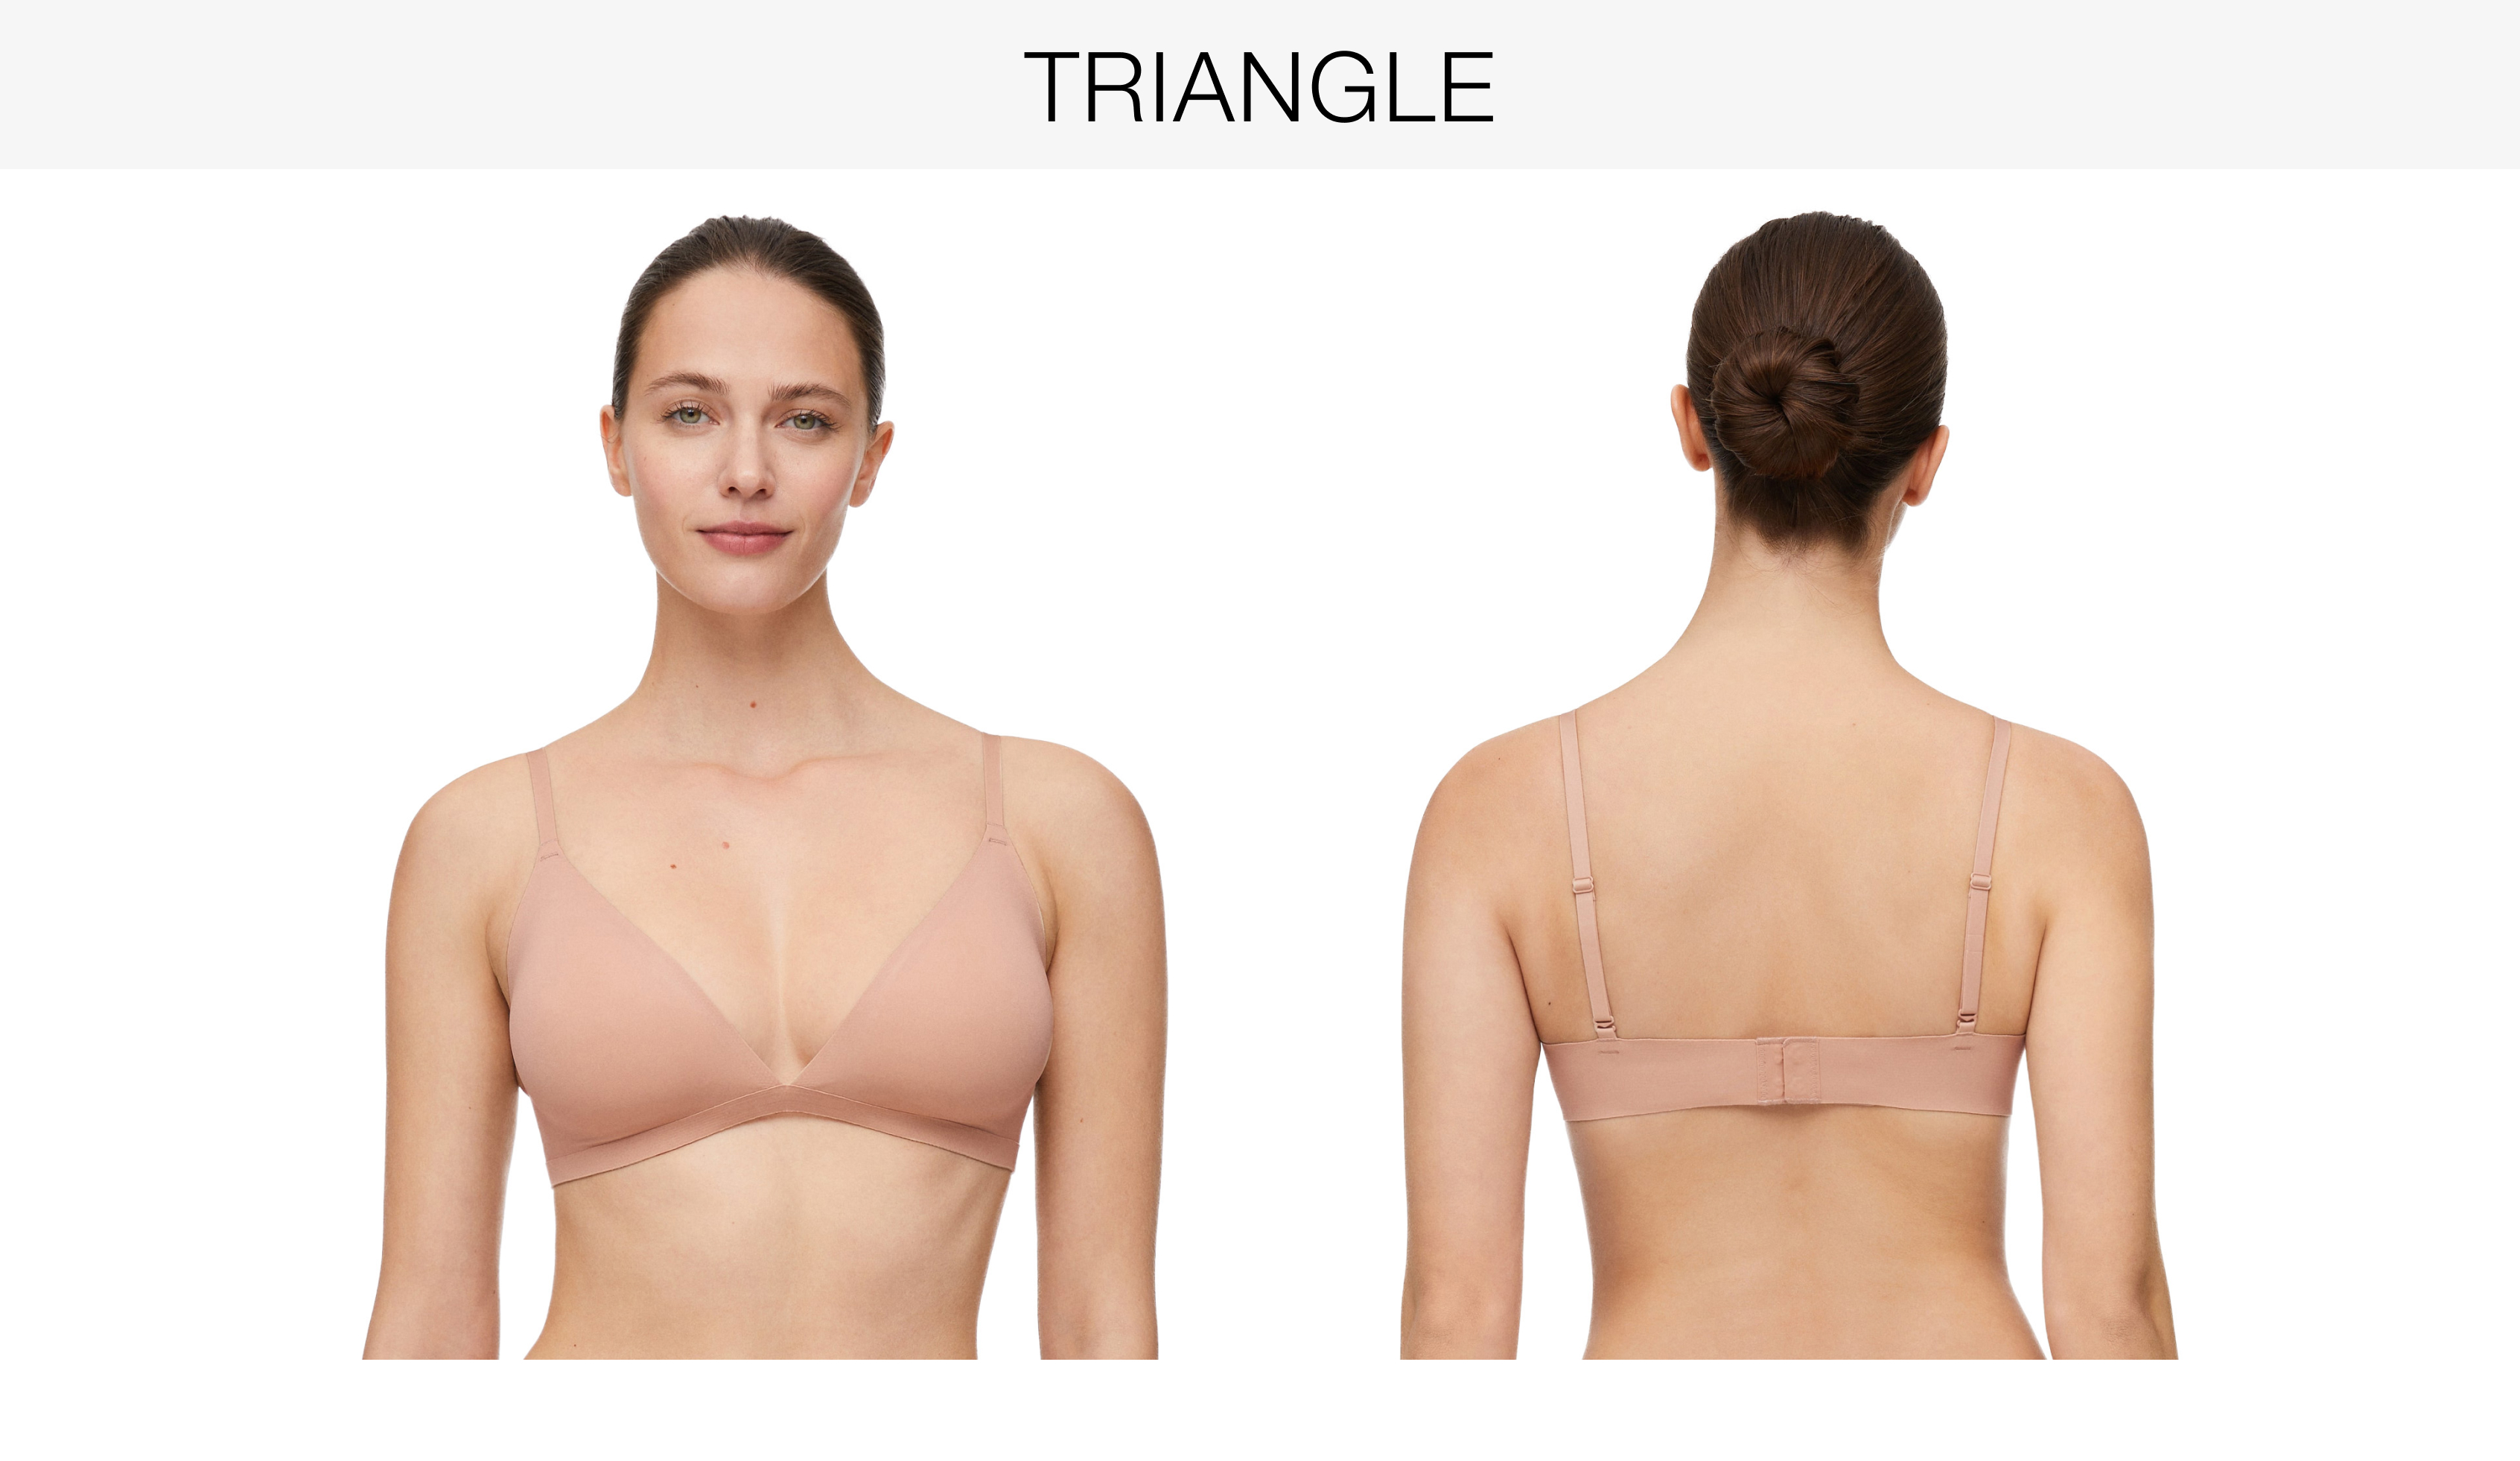 Invisible laser-cut halter bra